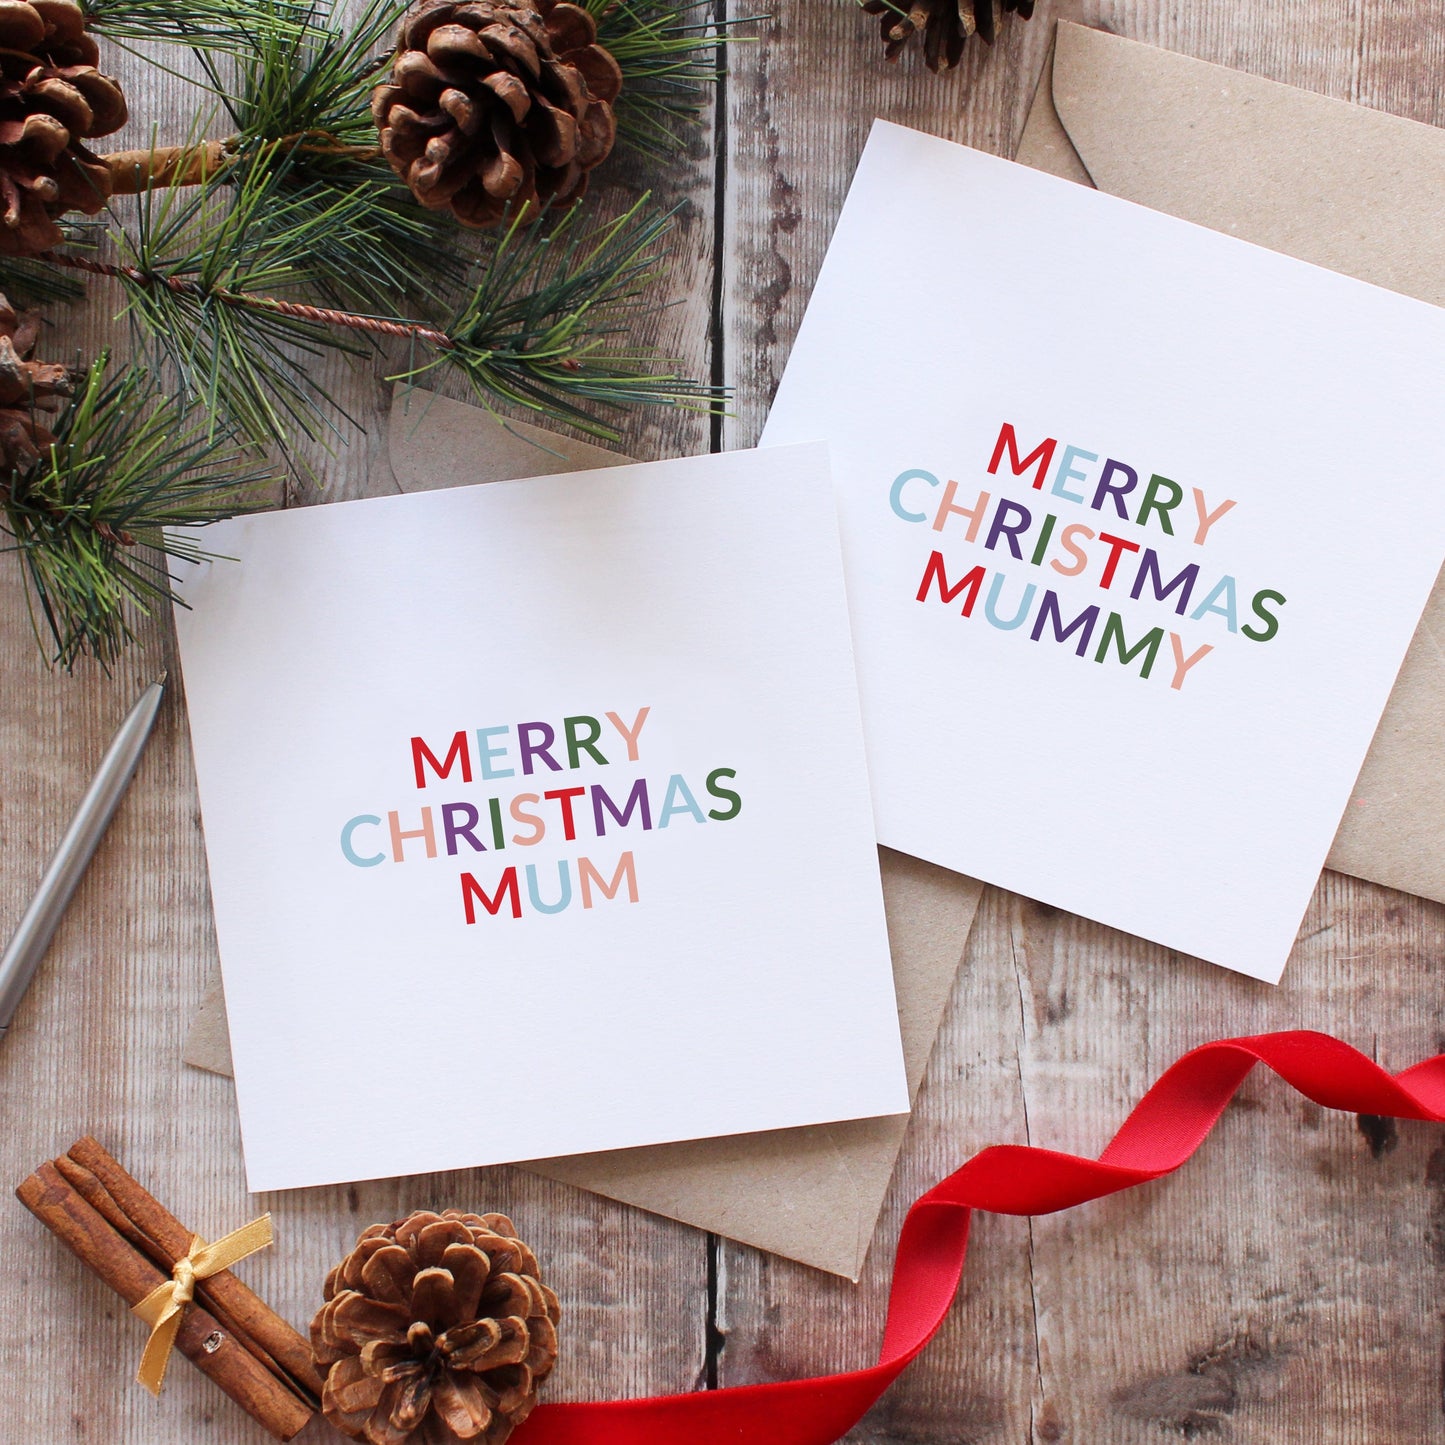 Mum or mummy Christmas cards from Purple Tree Designs